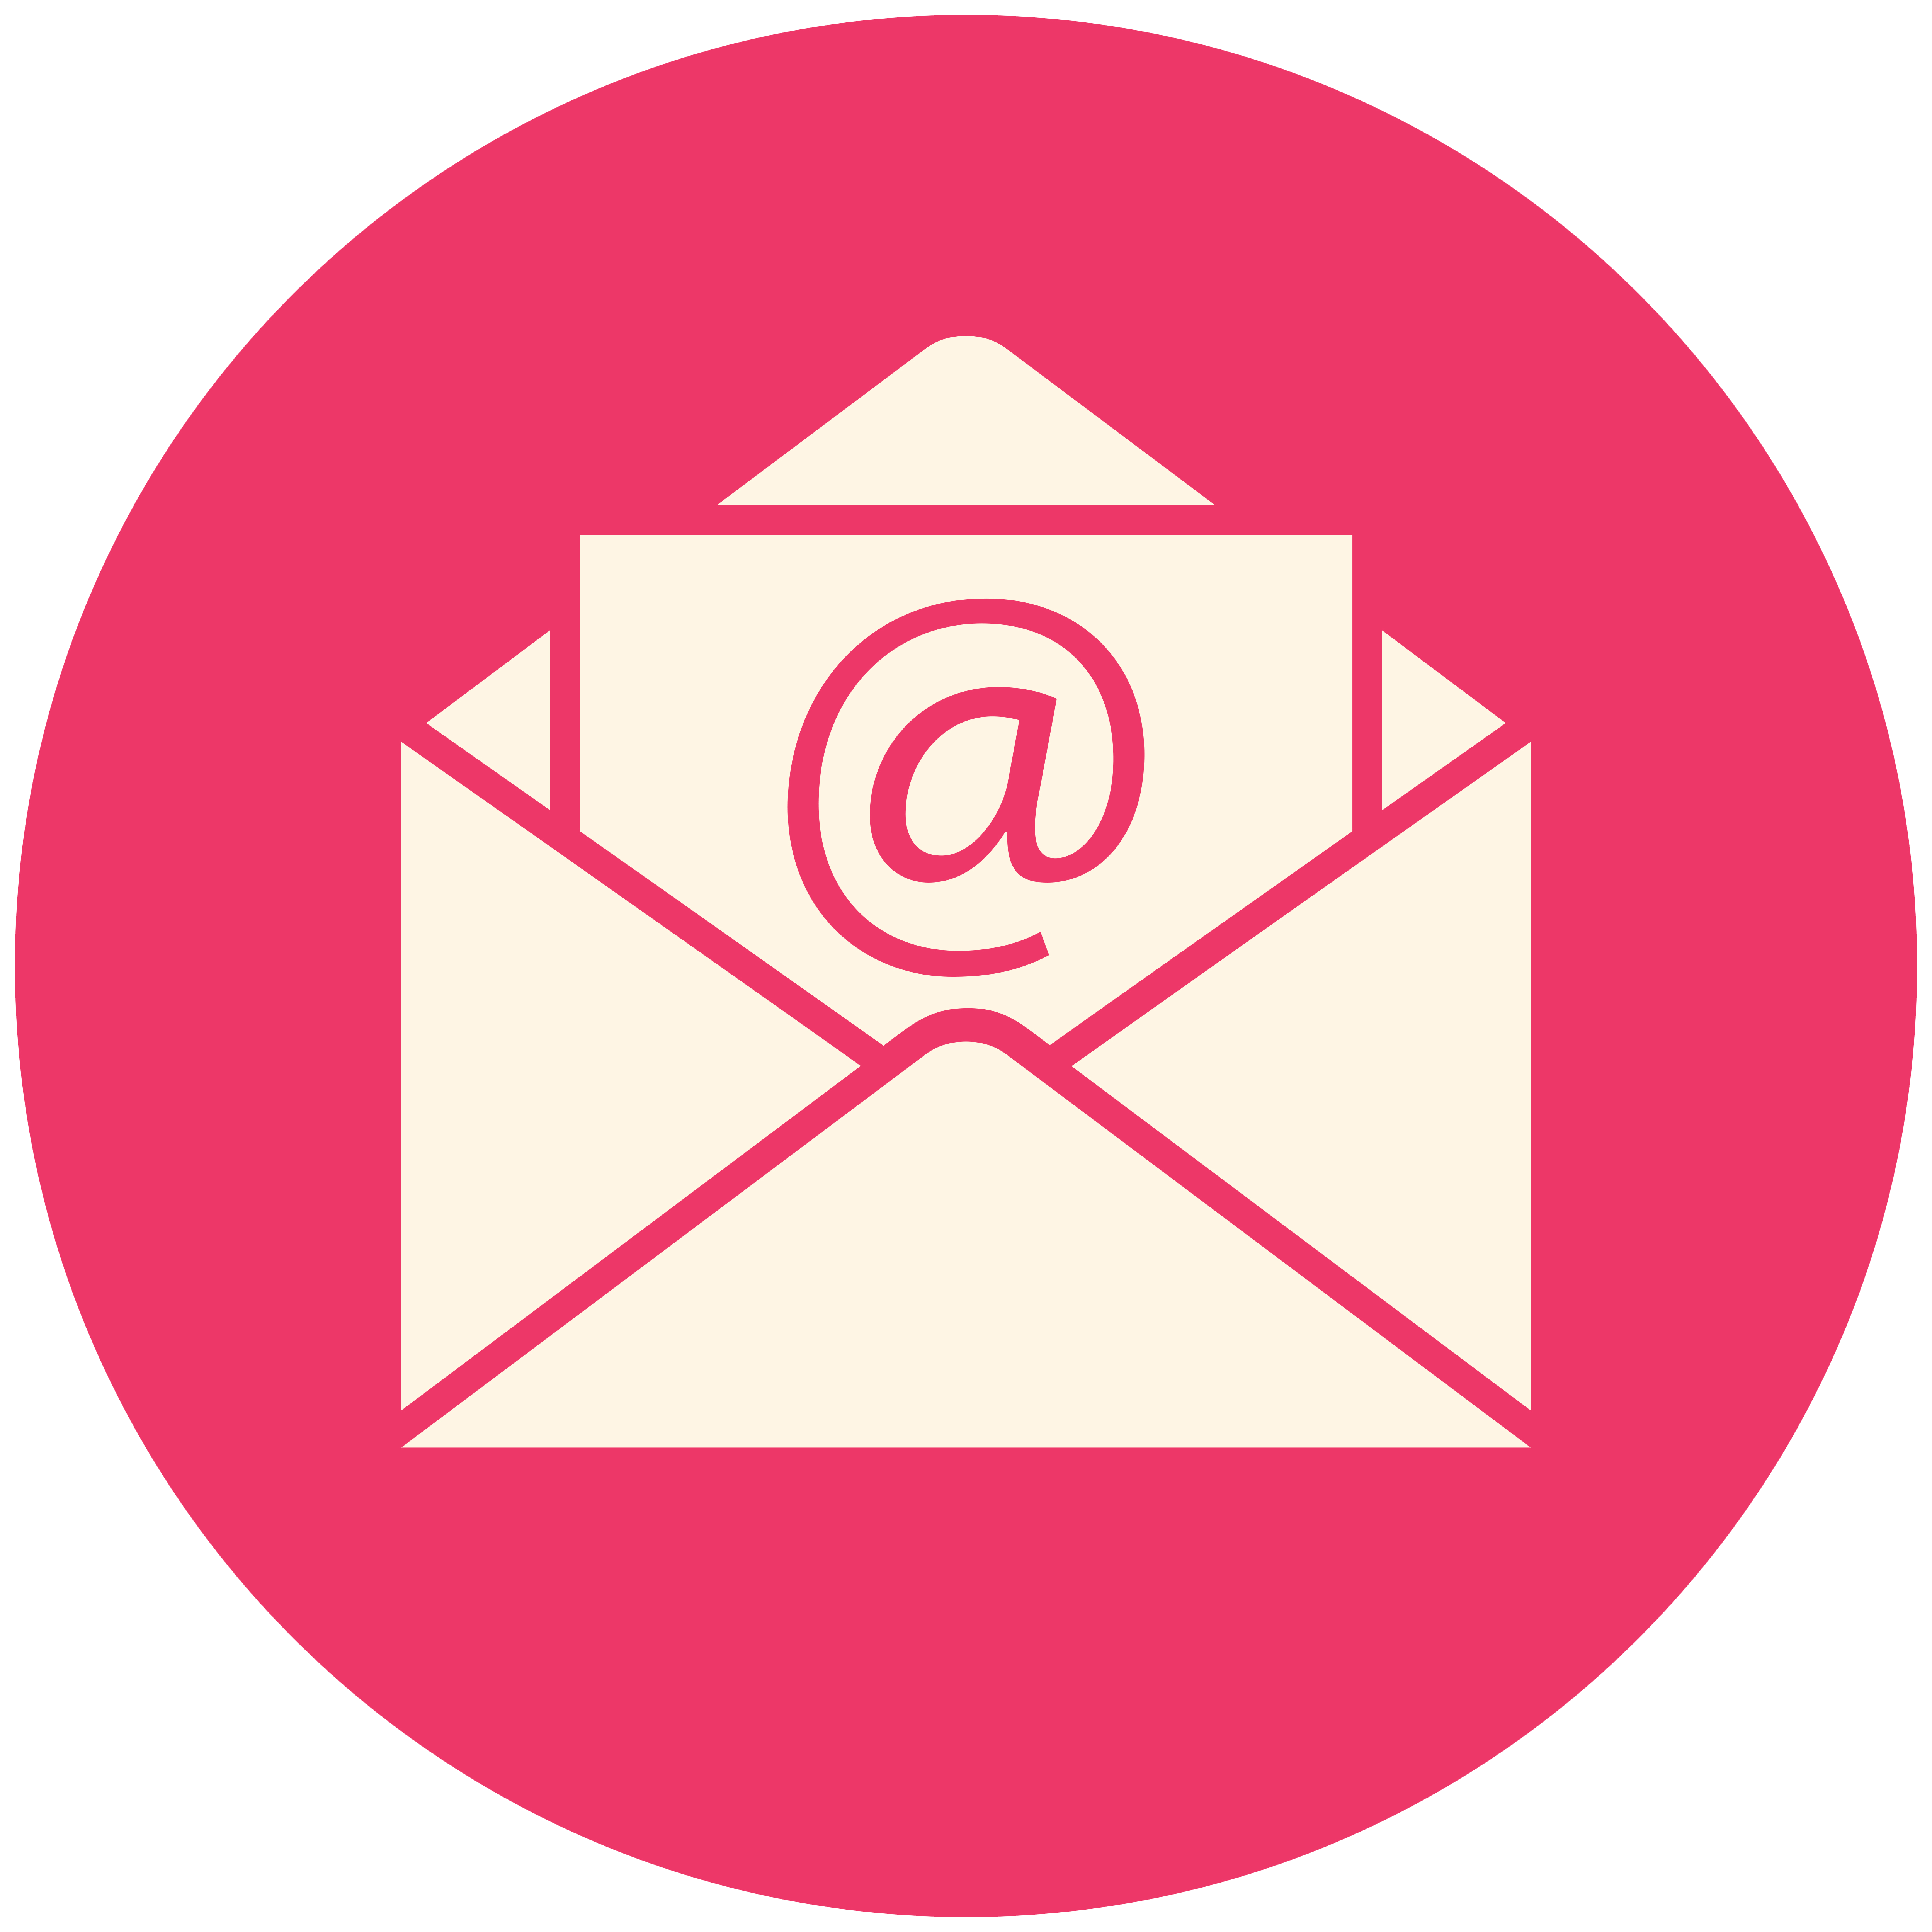 Picture mail. Значок почты. Пиктограмма электронная почта. Логотип электронной почты. Значок емейл.